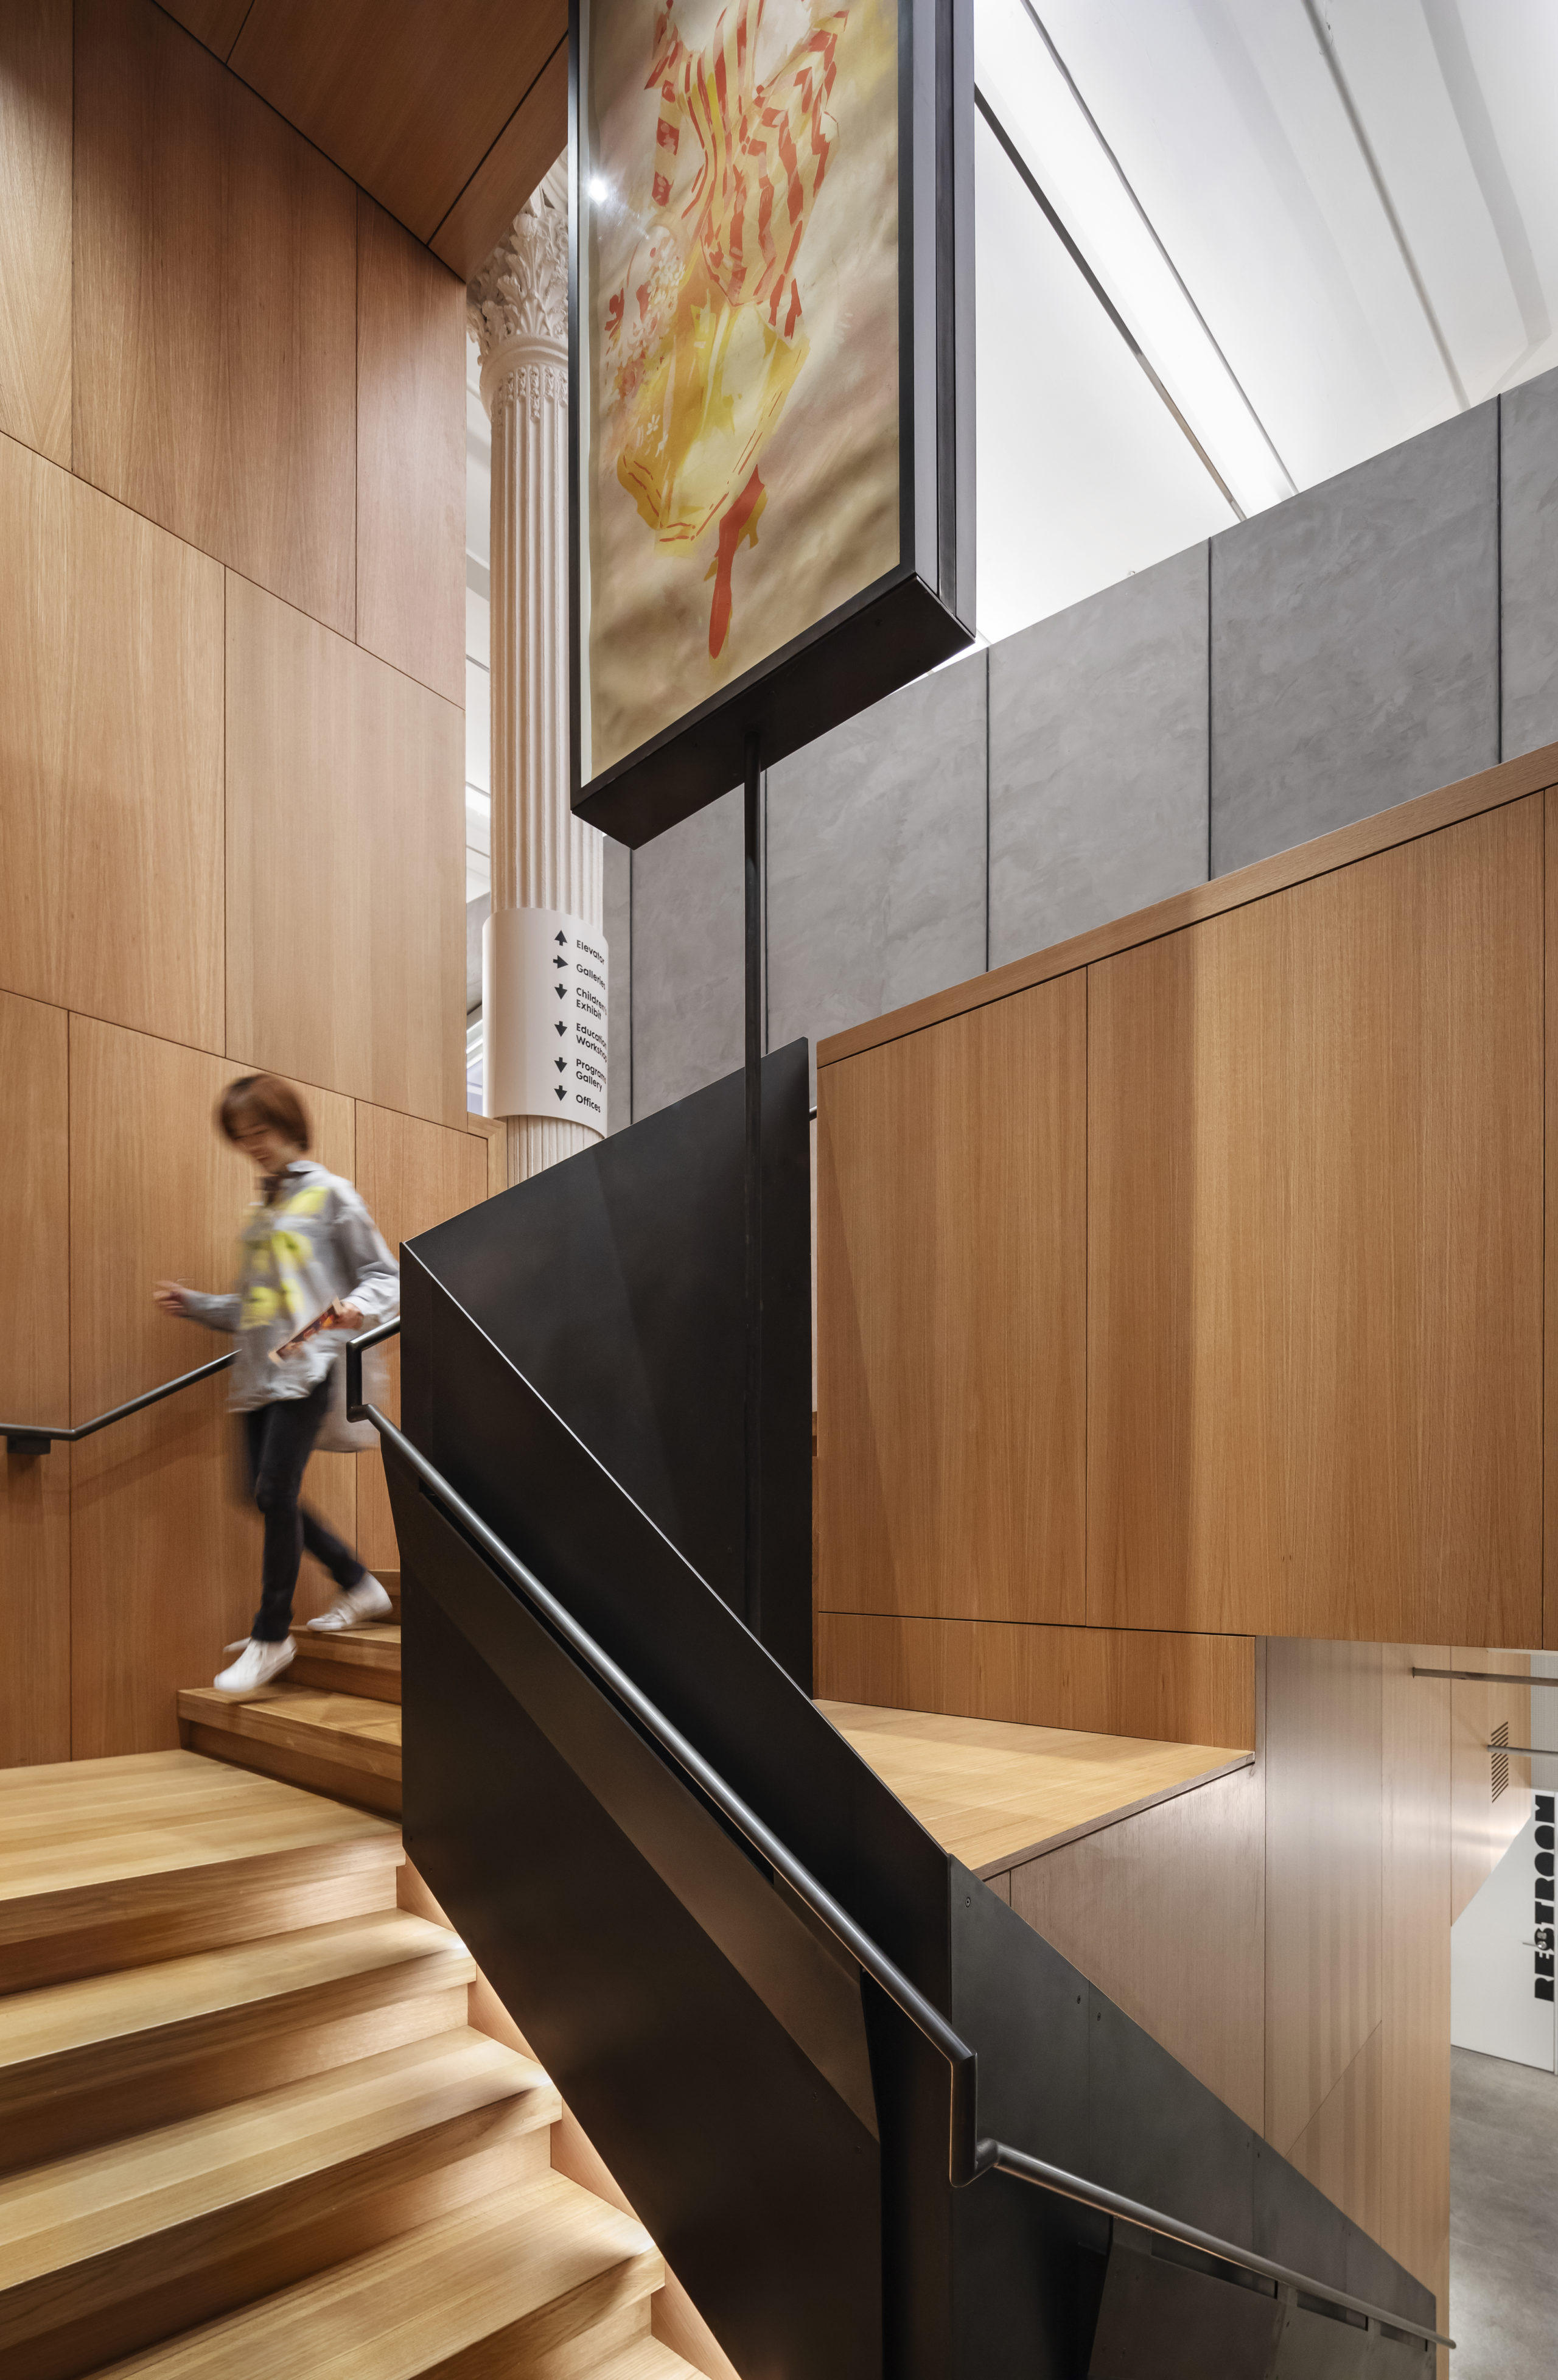 Interiors Honor Award: Poster House by LTL Architects, in New York, NY. Photo: Michael Moran/OTTO.